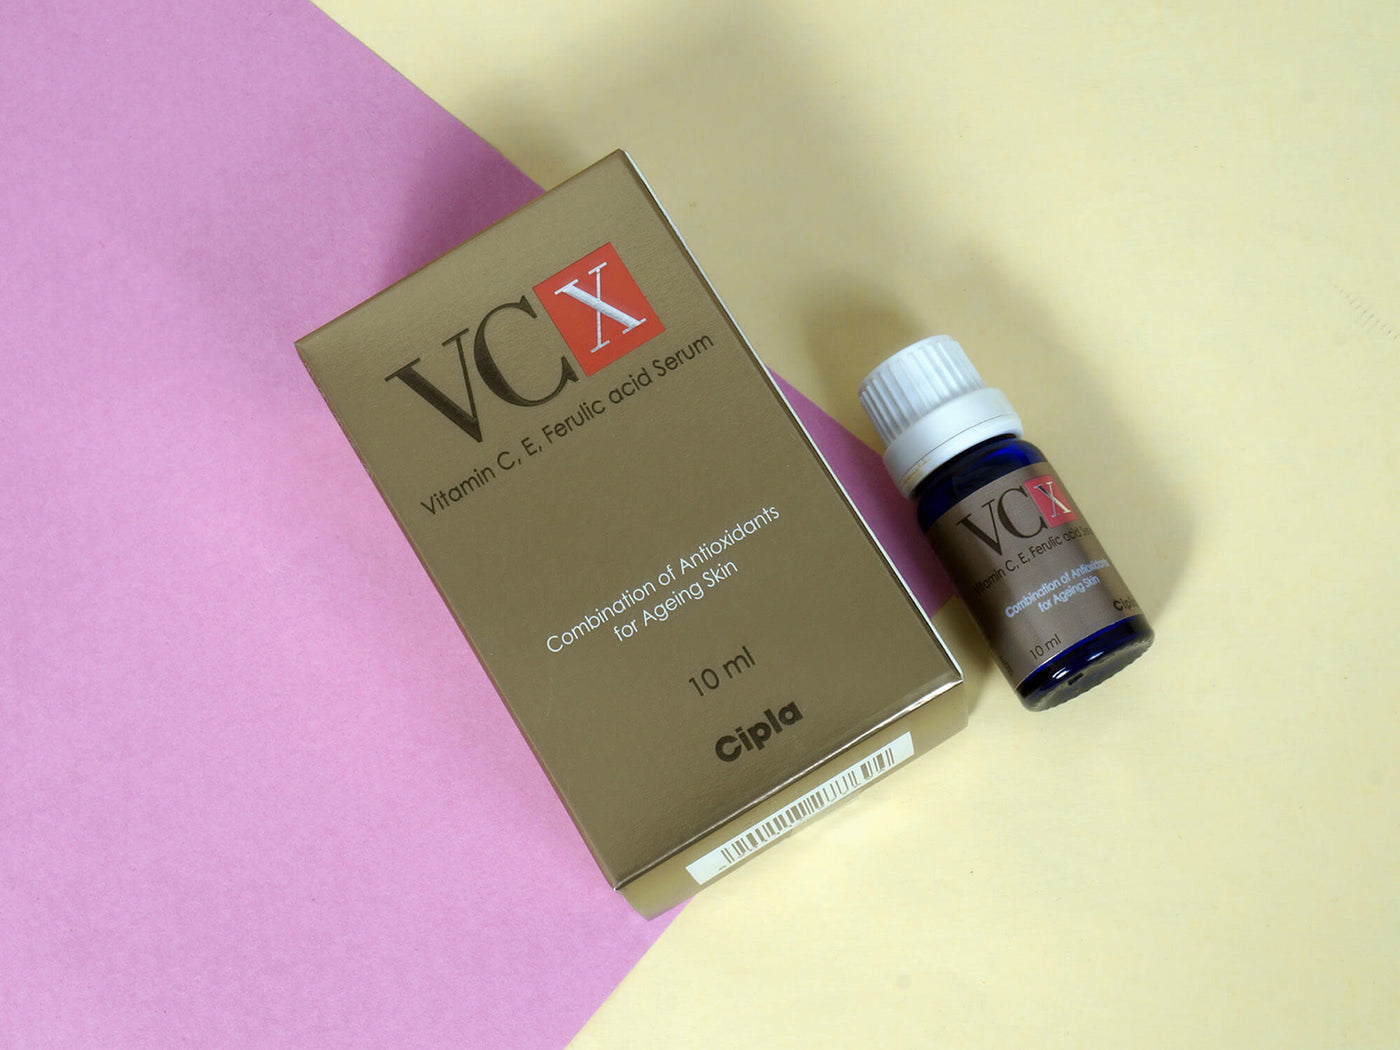 VCX Vitamin C,E, Ferulic Acid Serum